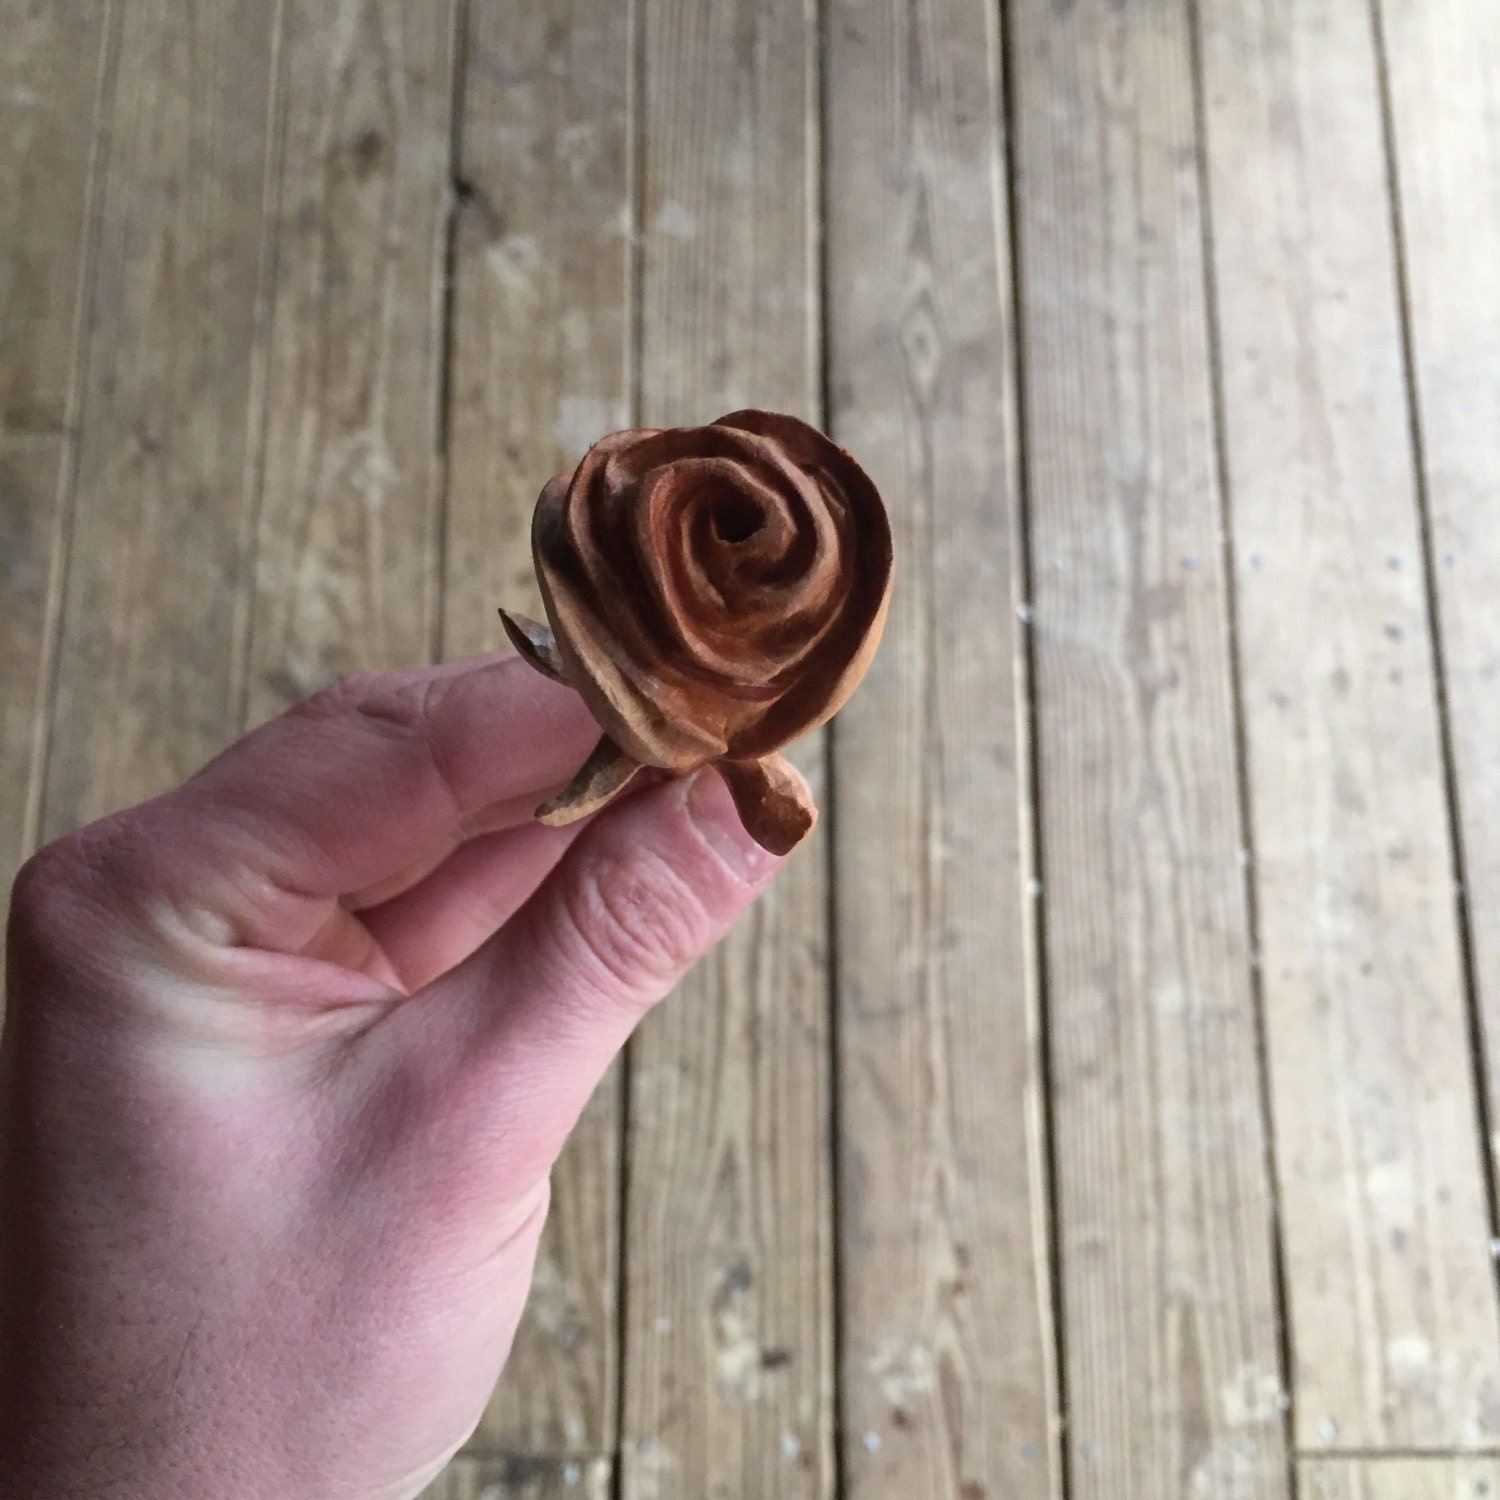 Rose Wood Carving - Flower Art